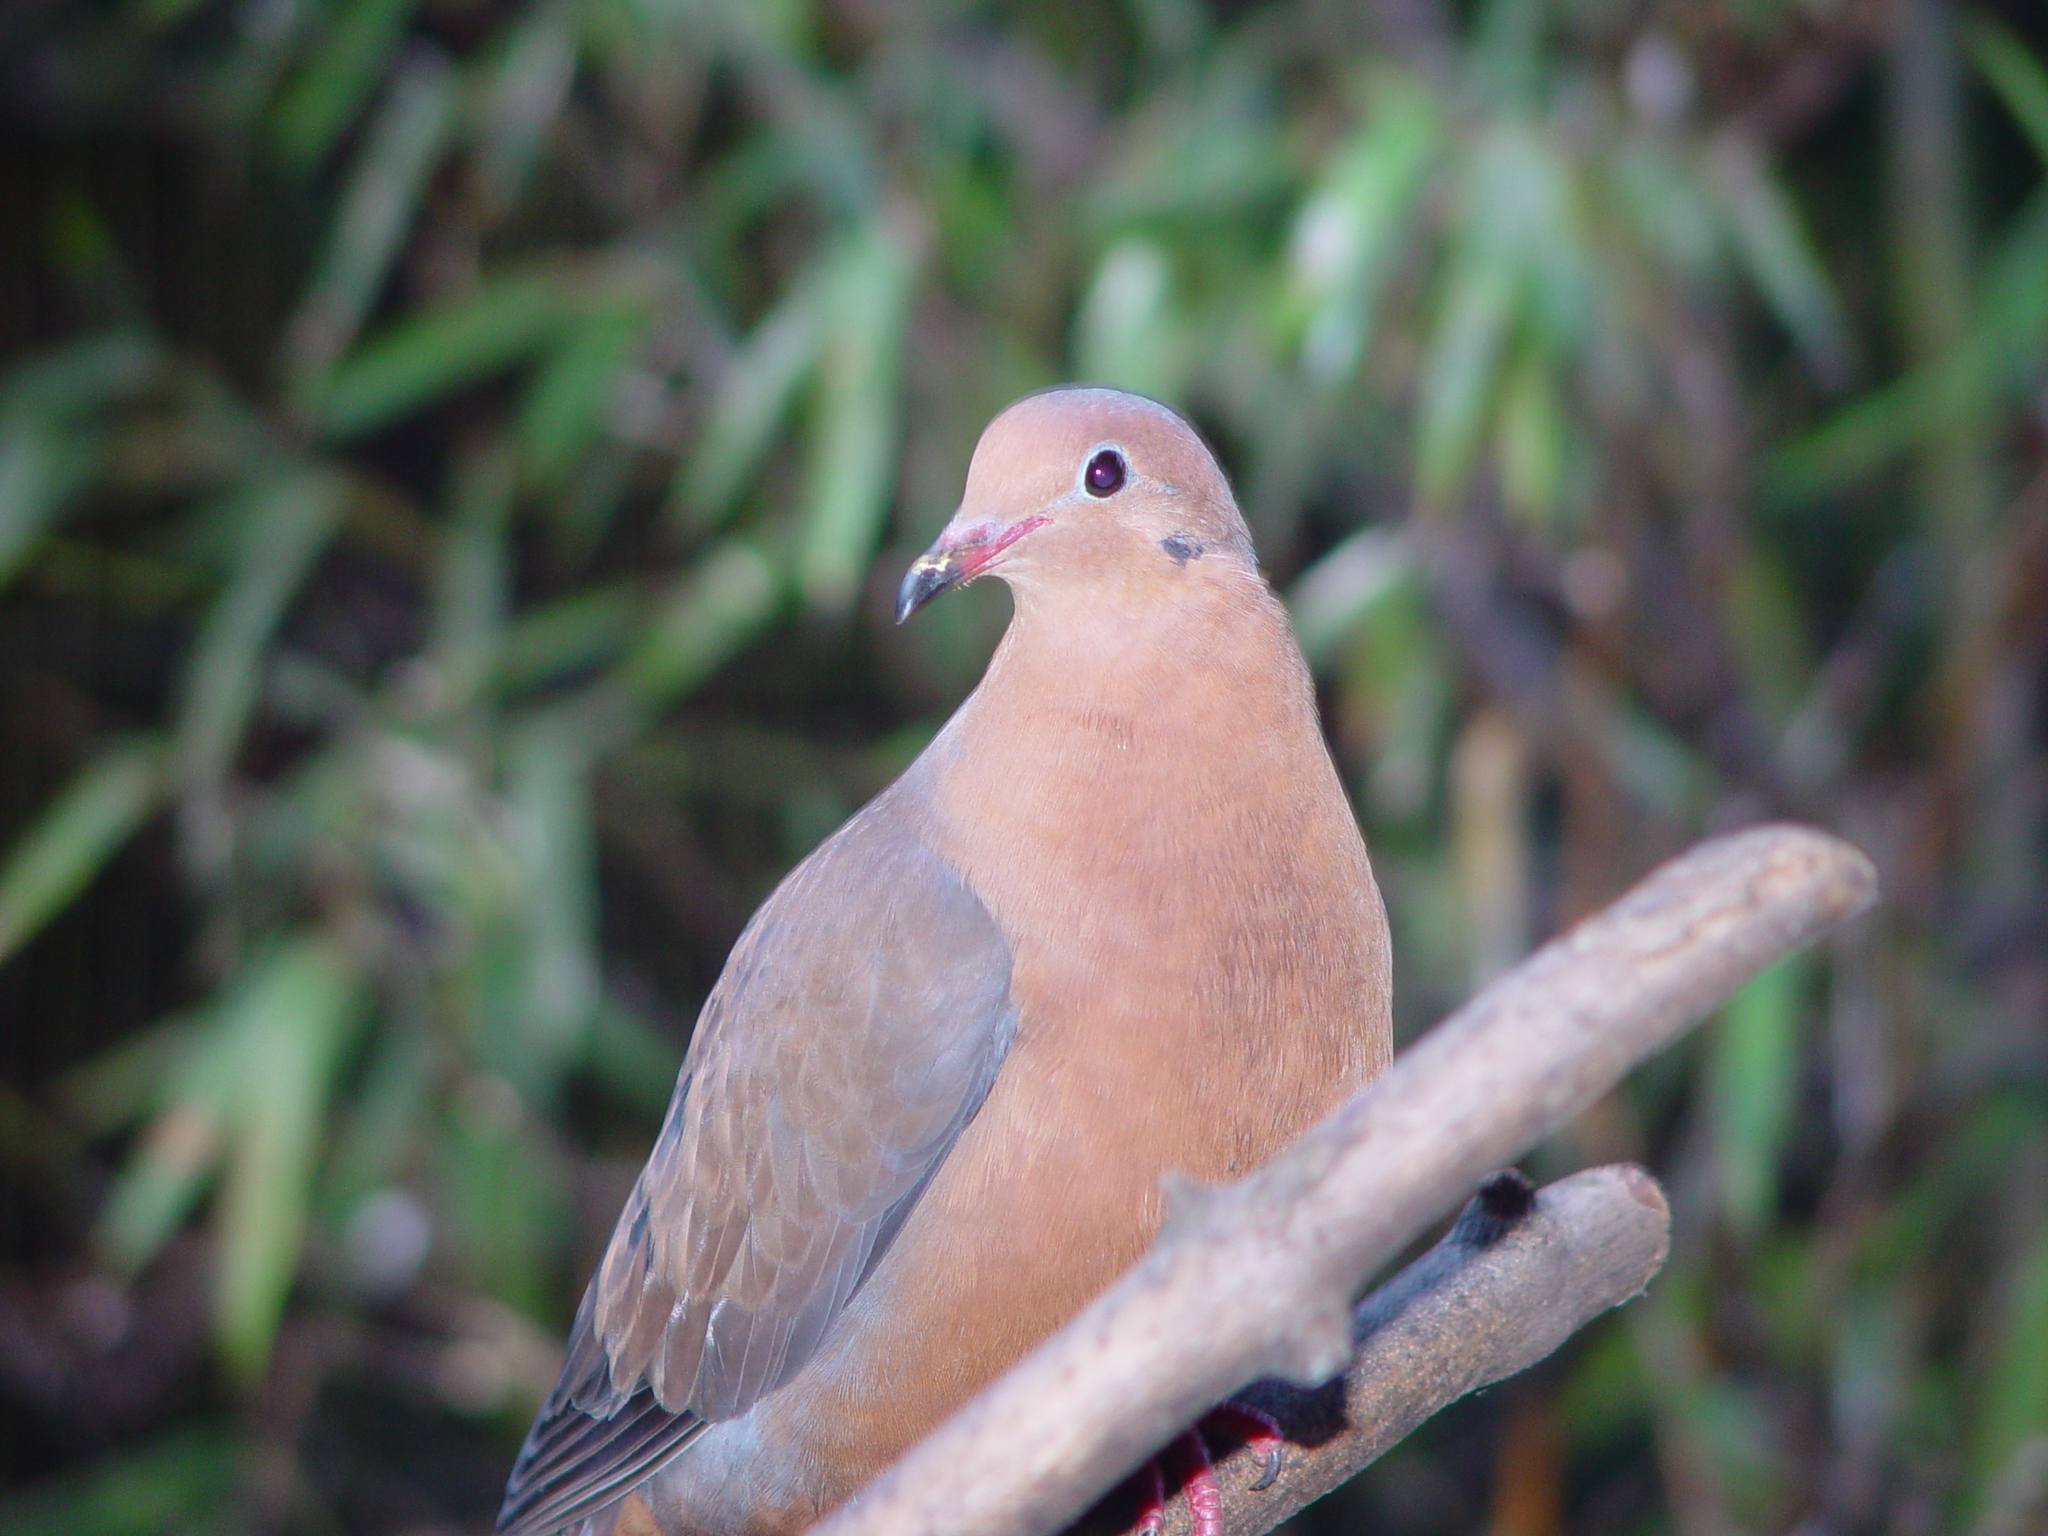 An-adult-socorro-dove-at-Bristol-Zoo-Gardens.JPG